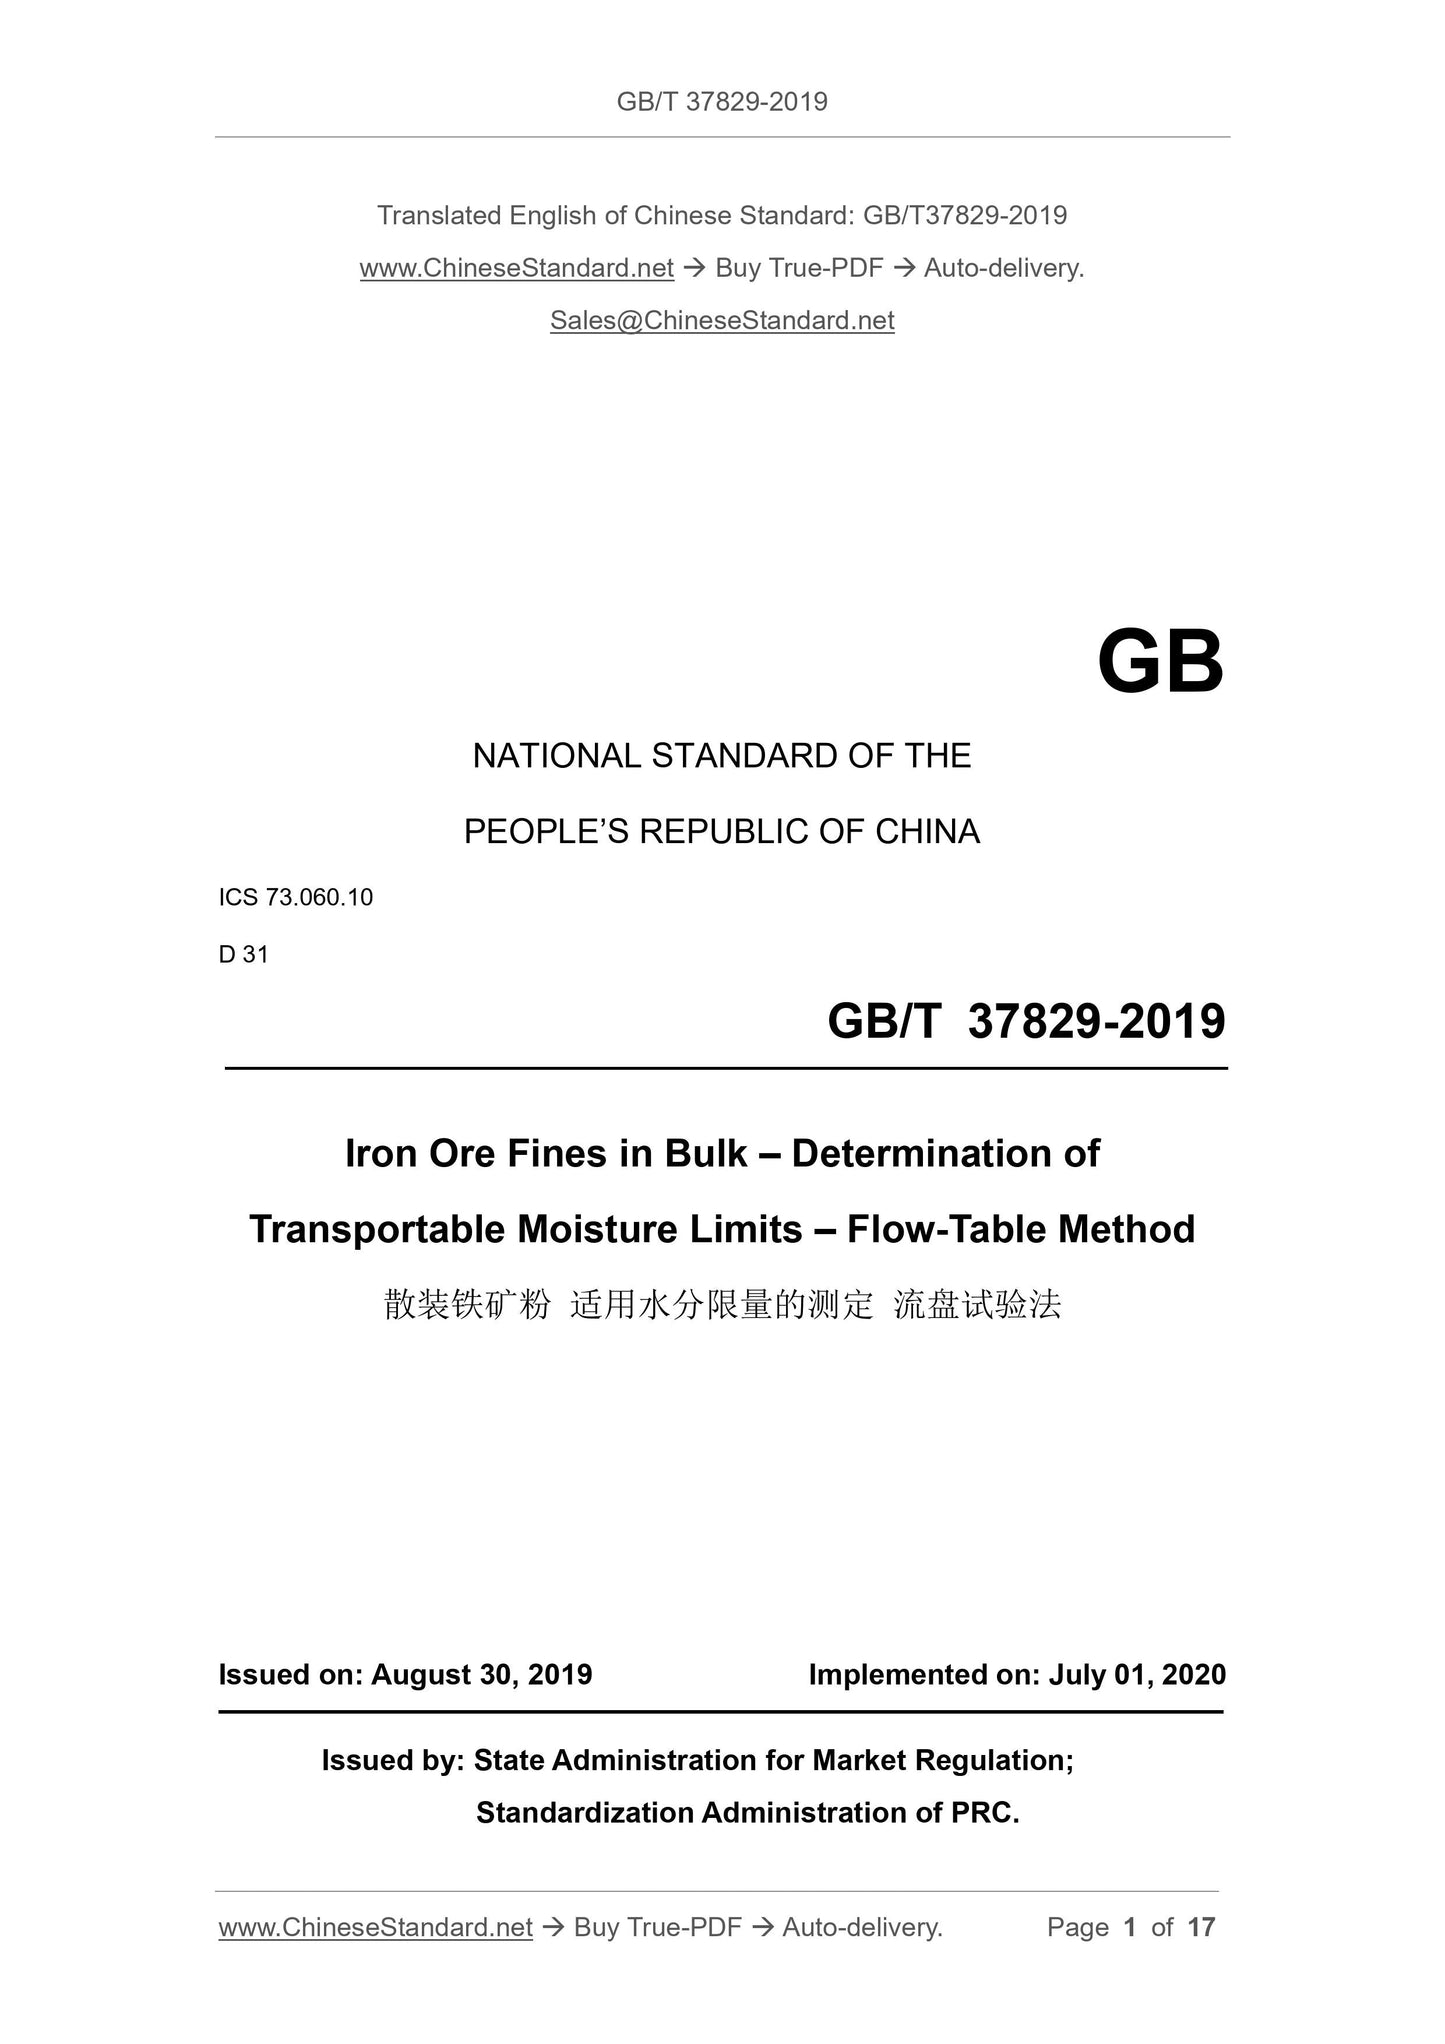 GBT37829-2019 Page 1